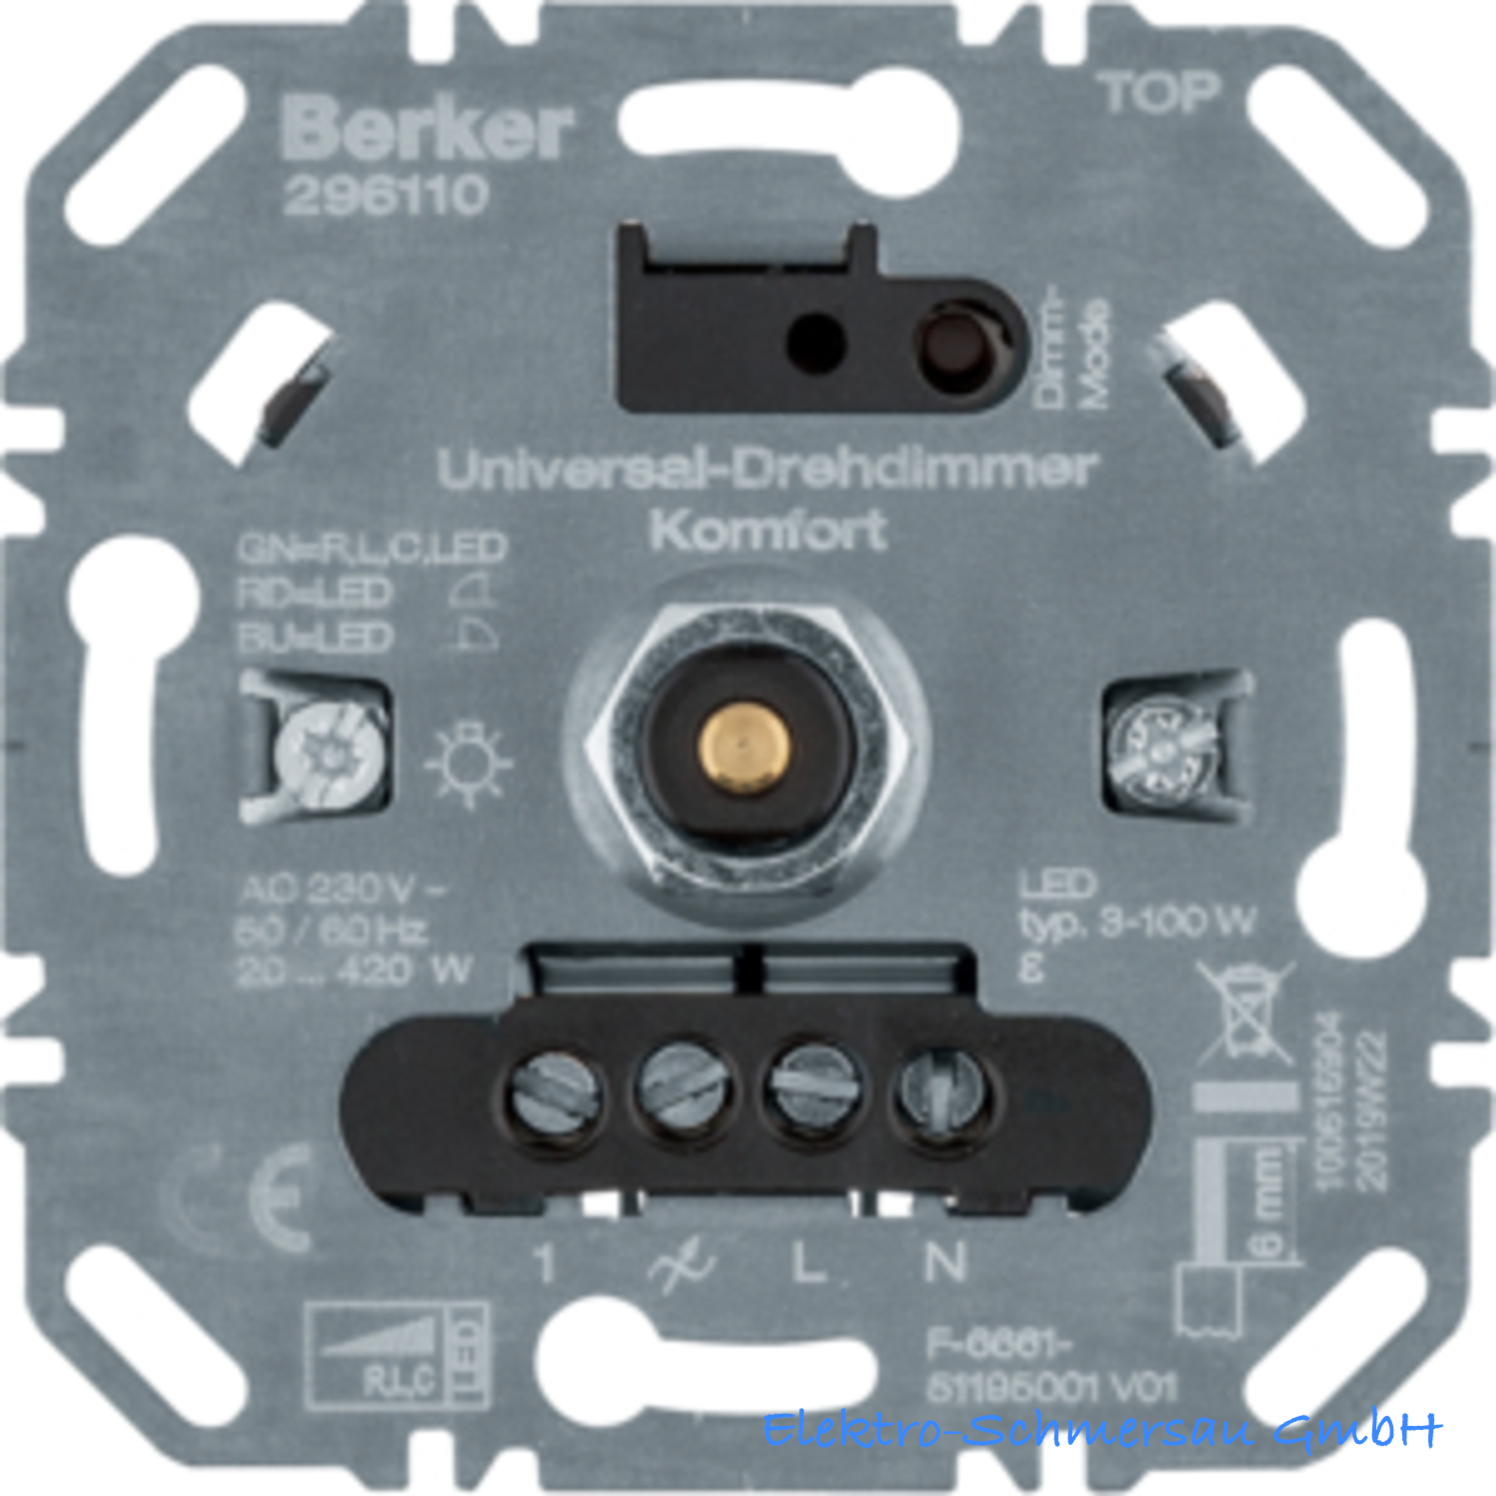 Berker Universal-Drehdimmer Komfort (RI C LED) 296110 Softrastung